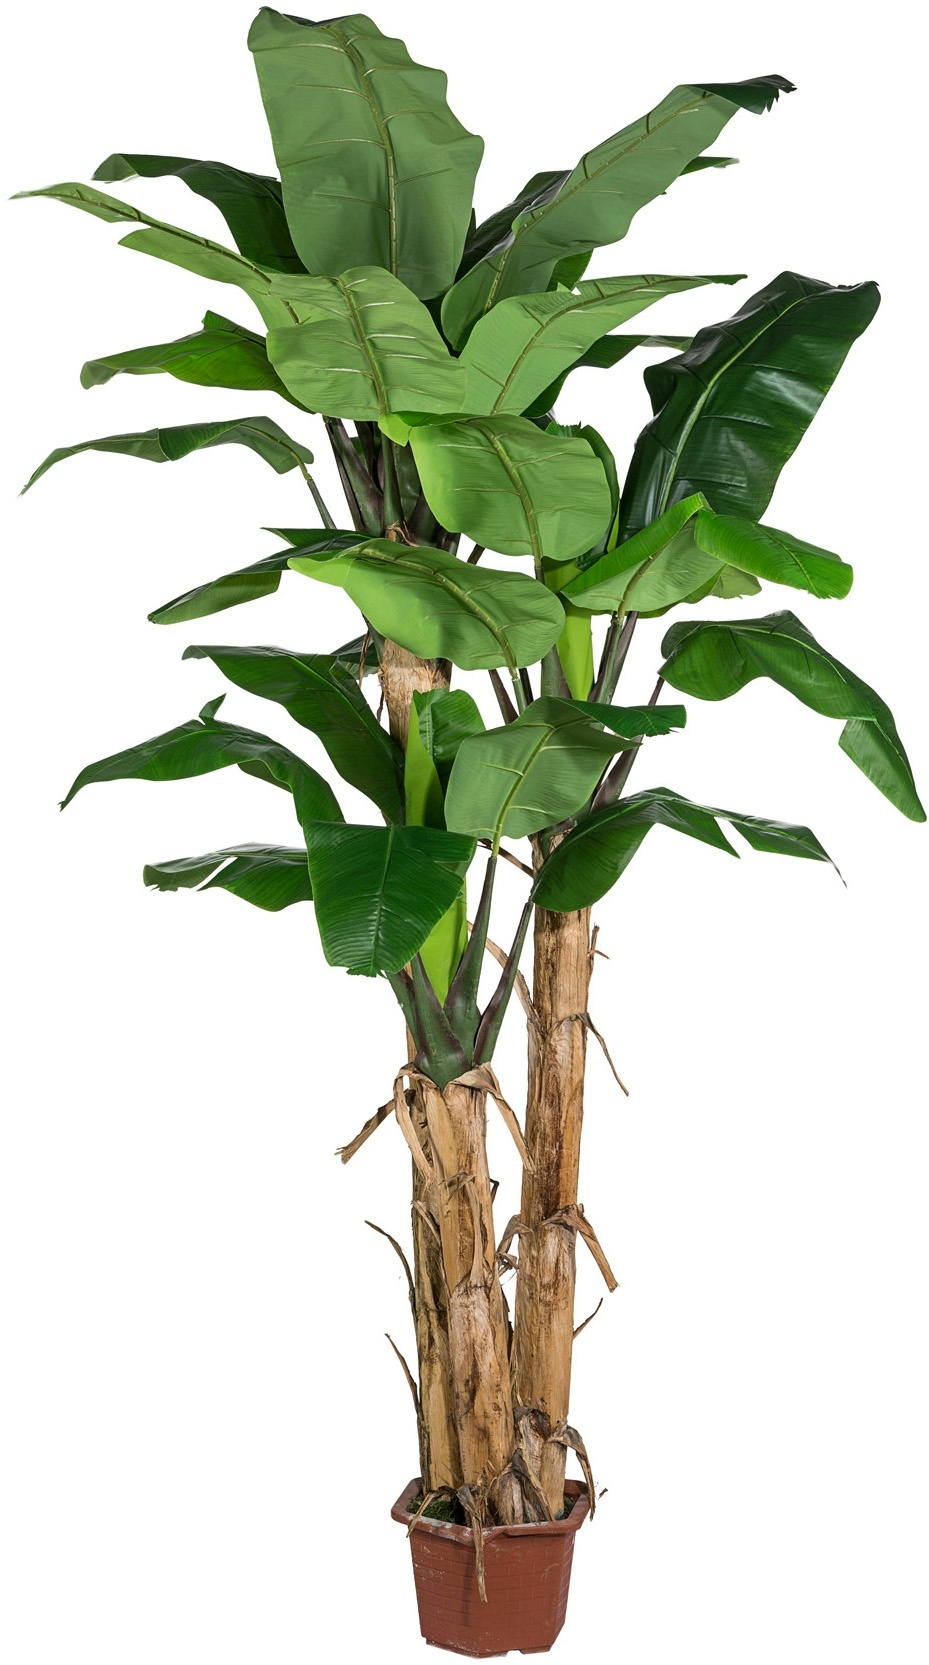 CREATIV green Künstliche Palme Bananenpflanze 280cm im Topf